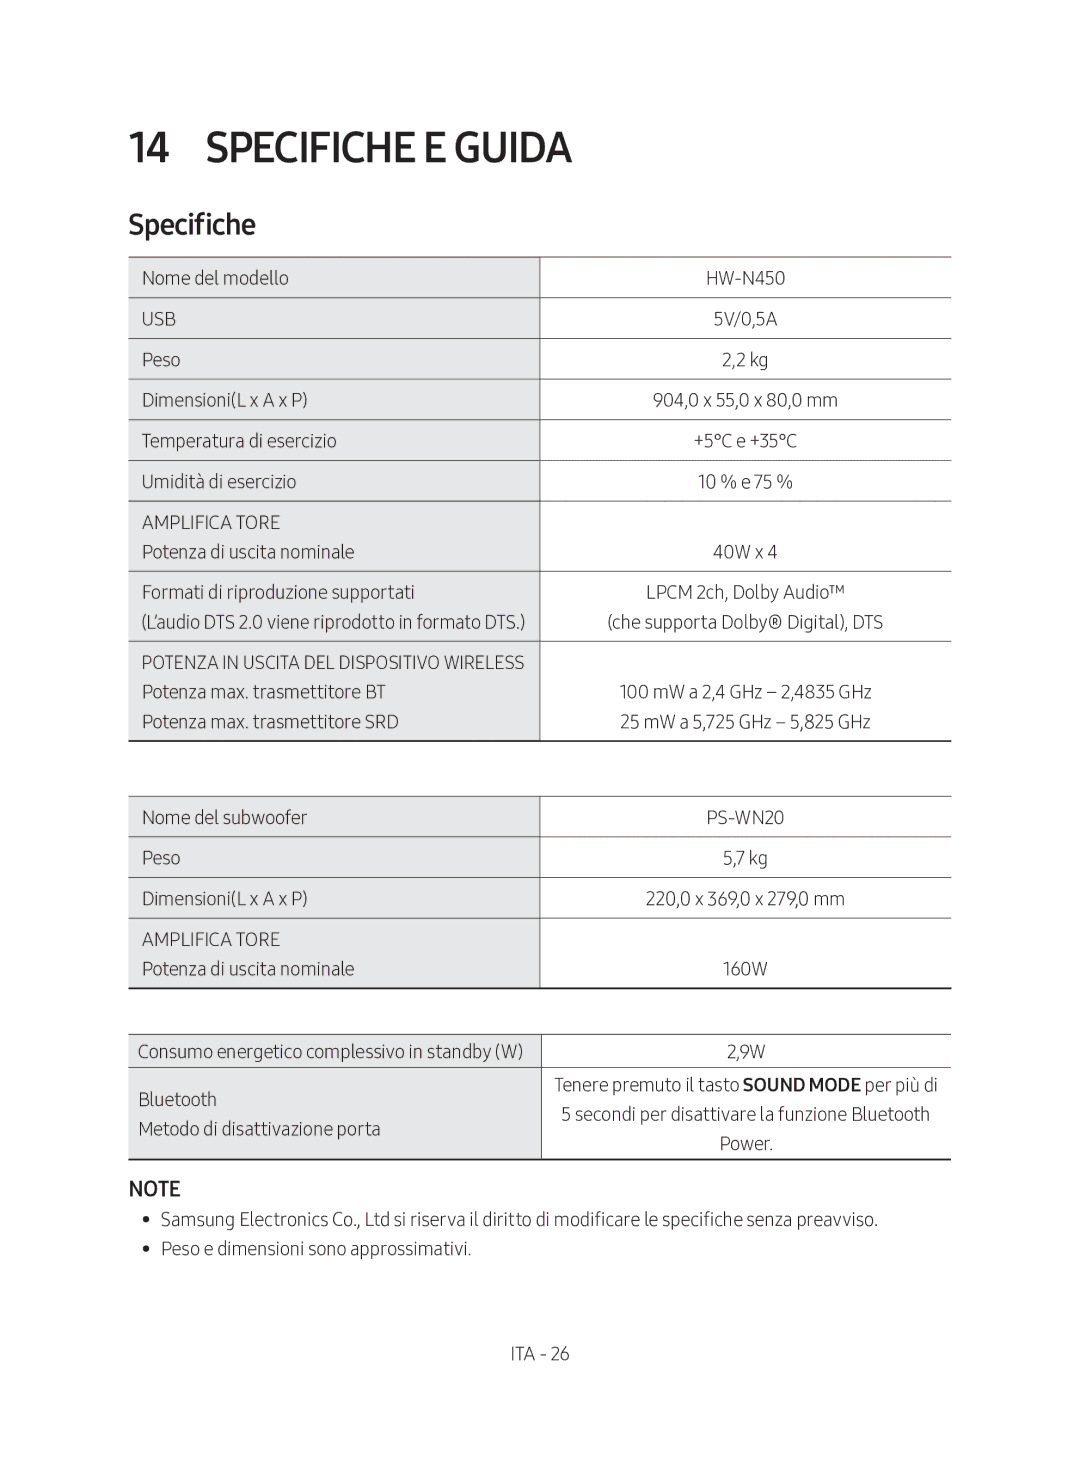 Samsung HW-N450/ZF manual Specifiche E Guida 